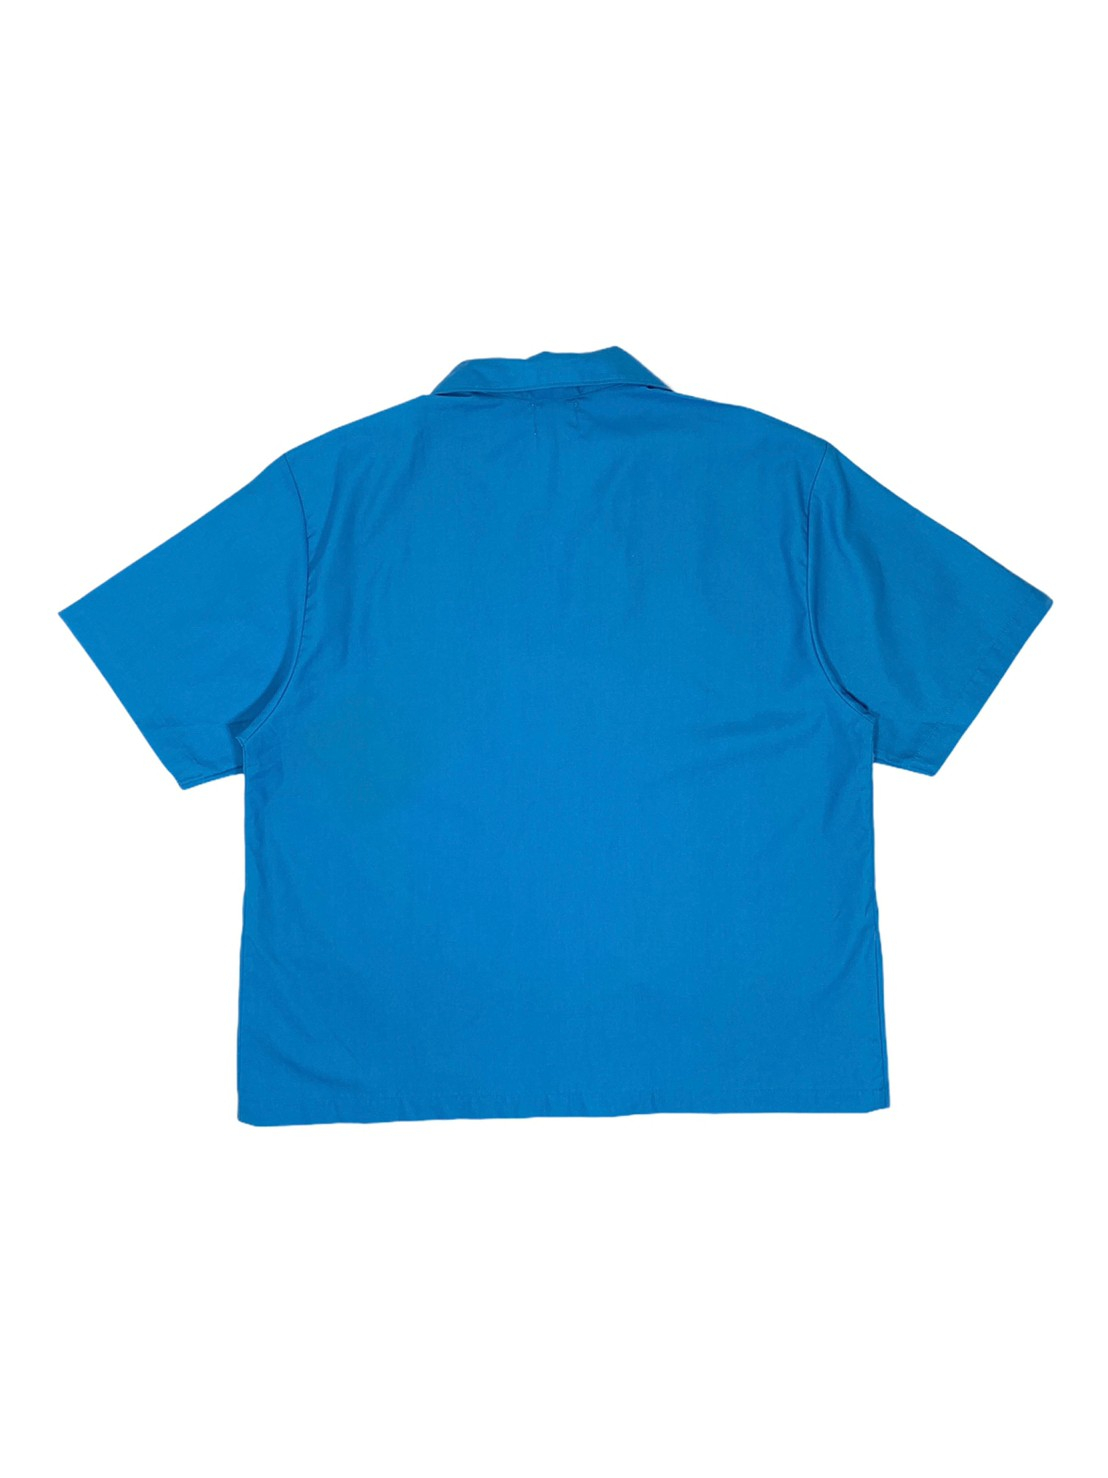 Sunrise Hawaii shirt (Ocean Blue)